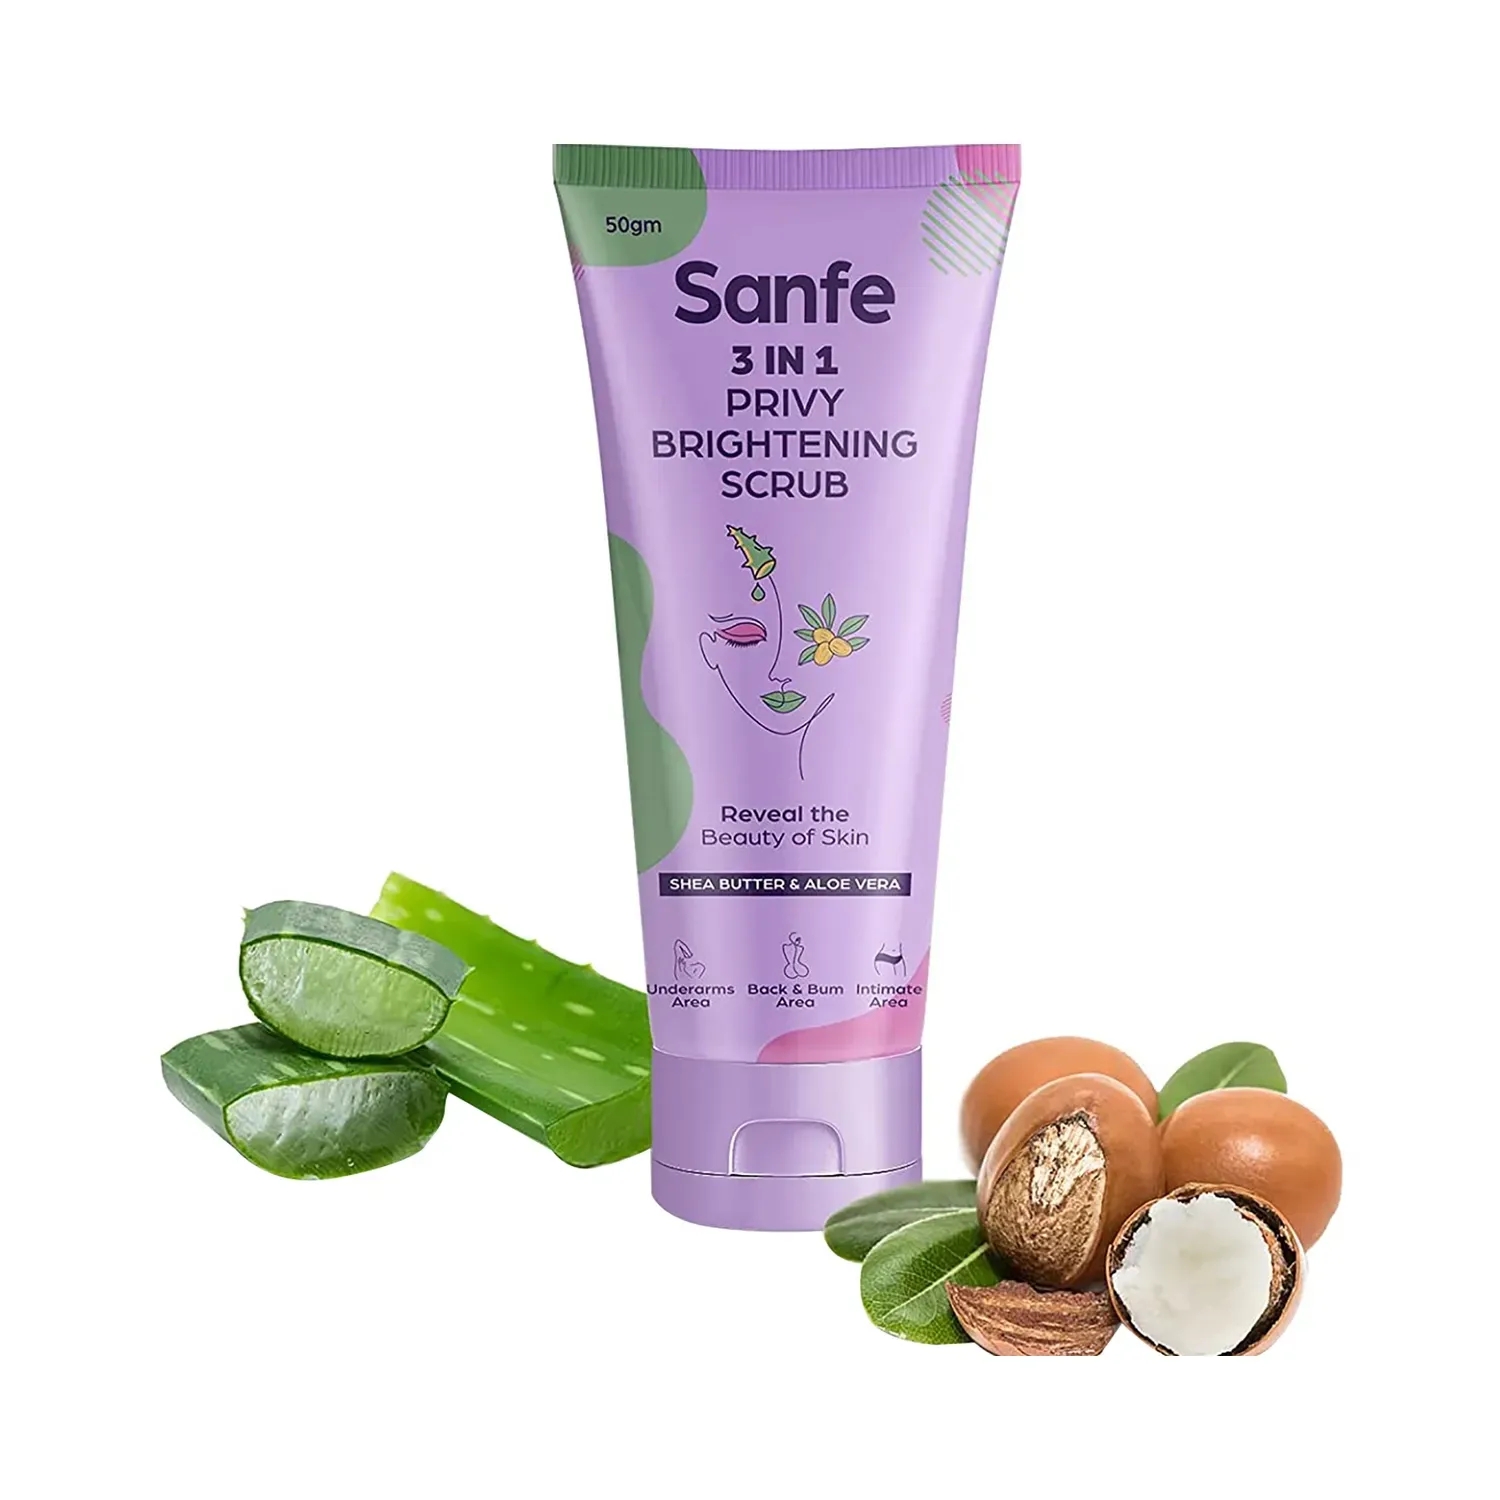 Sanfe | Sanfe 3 In 1 Privy Brightening Scrub (50g)